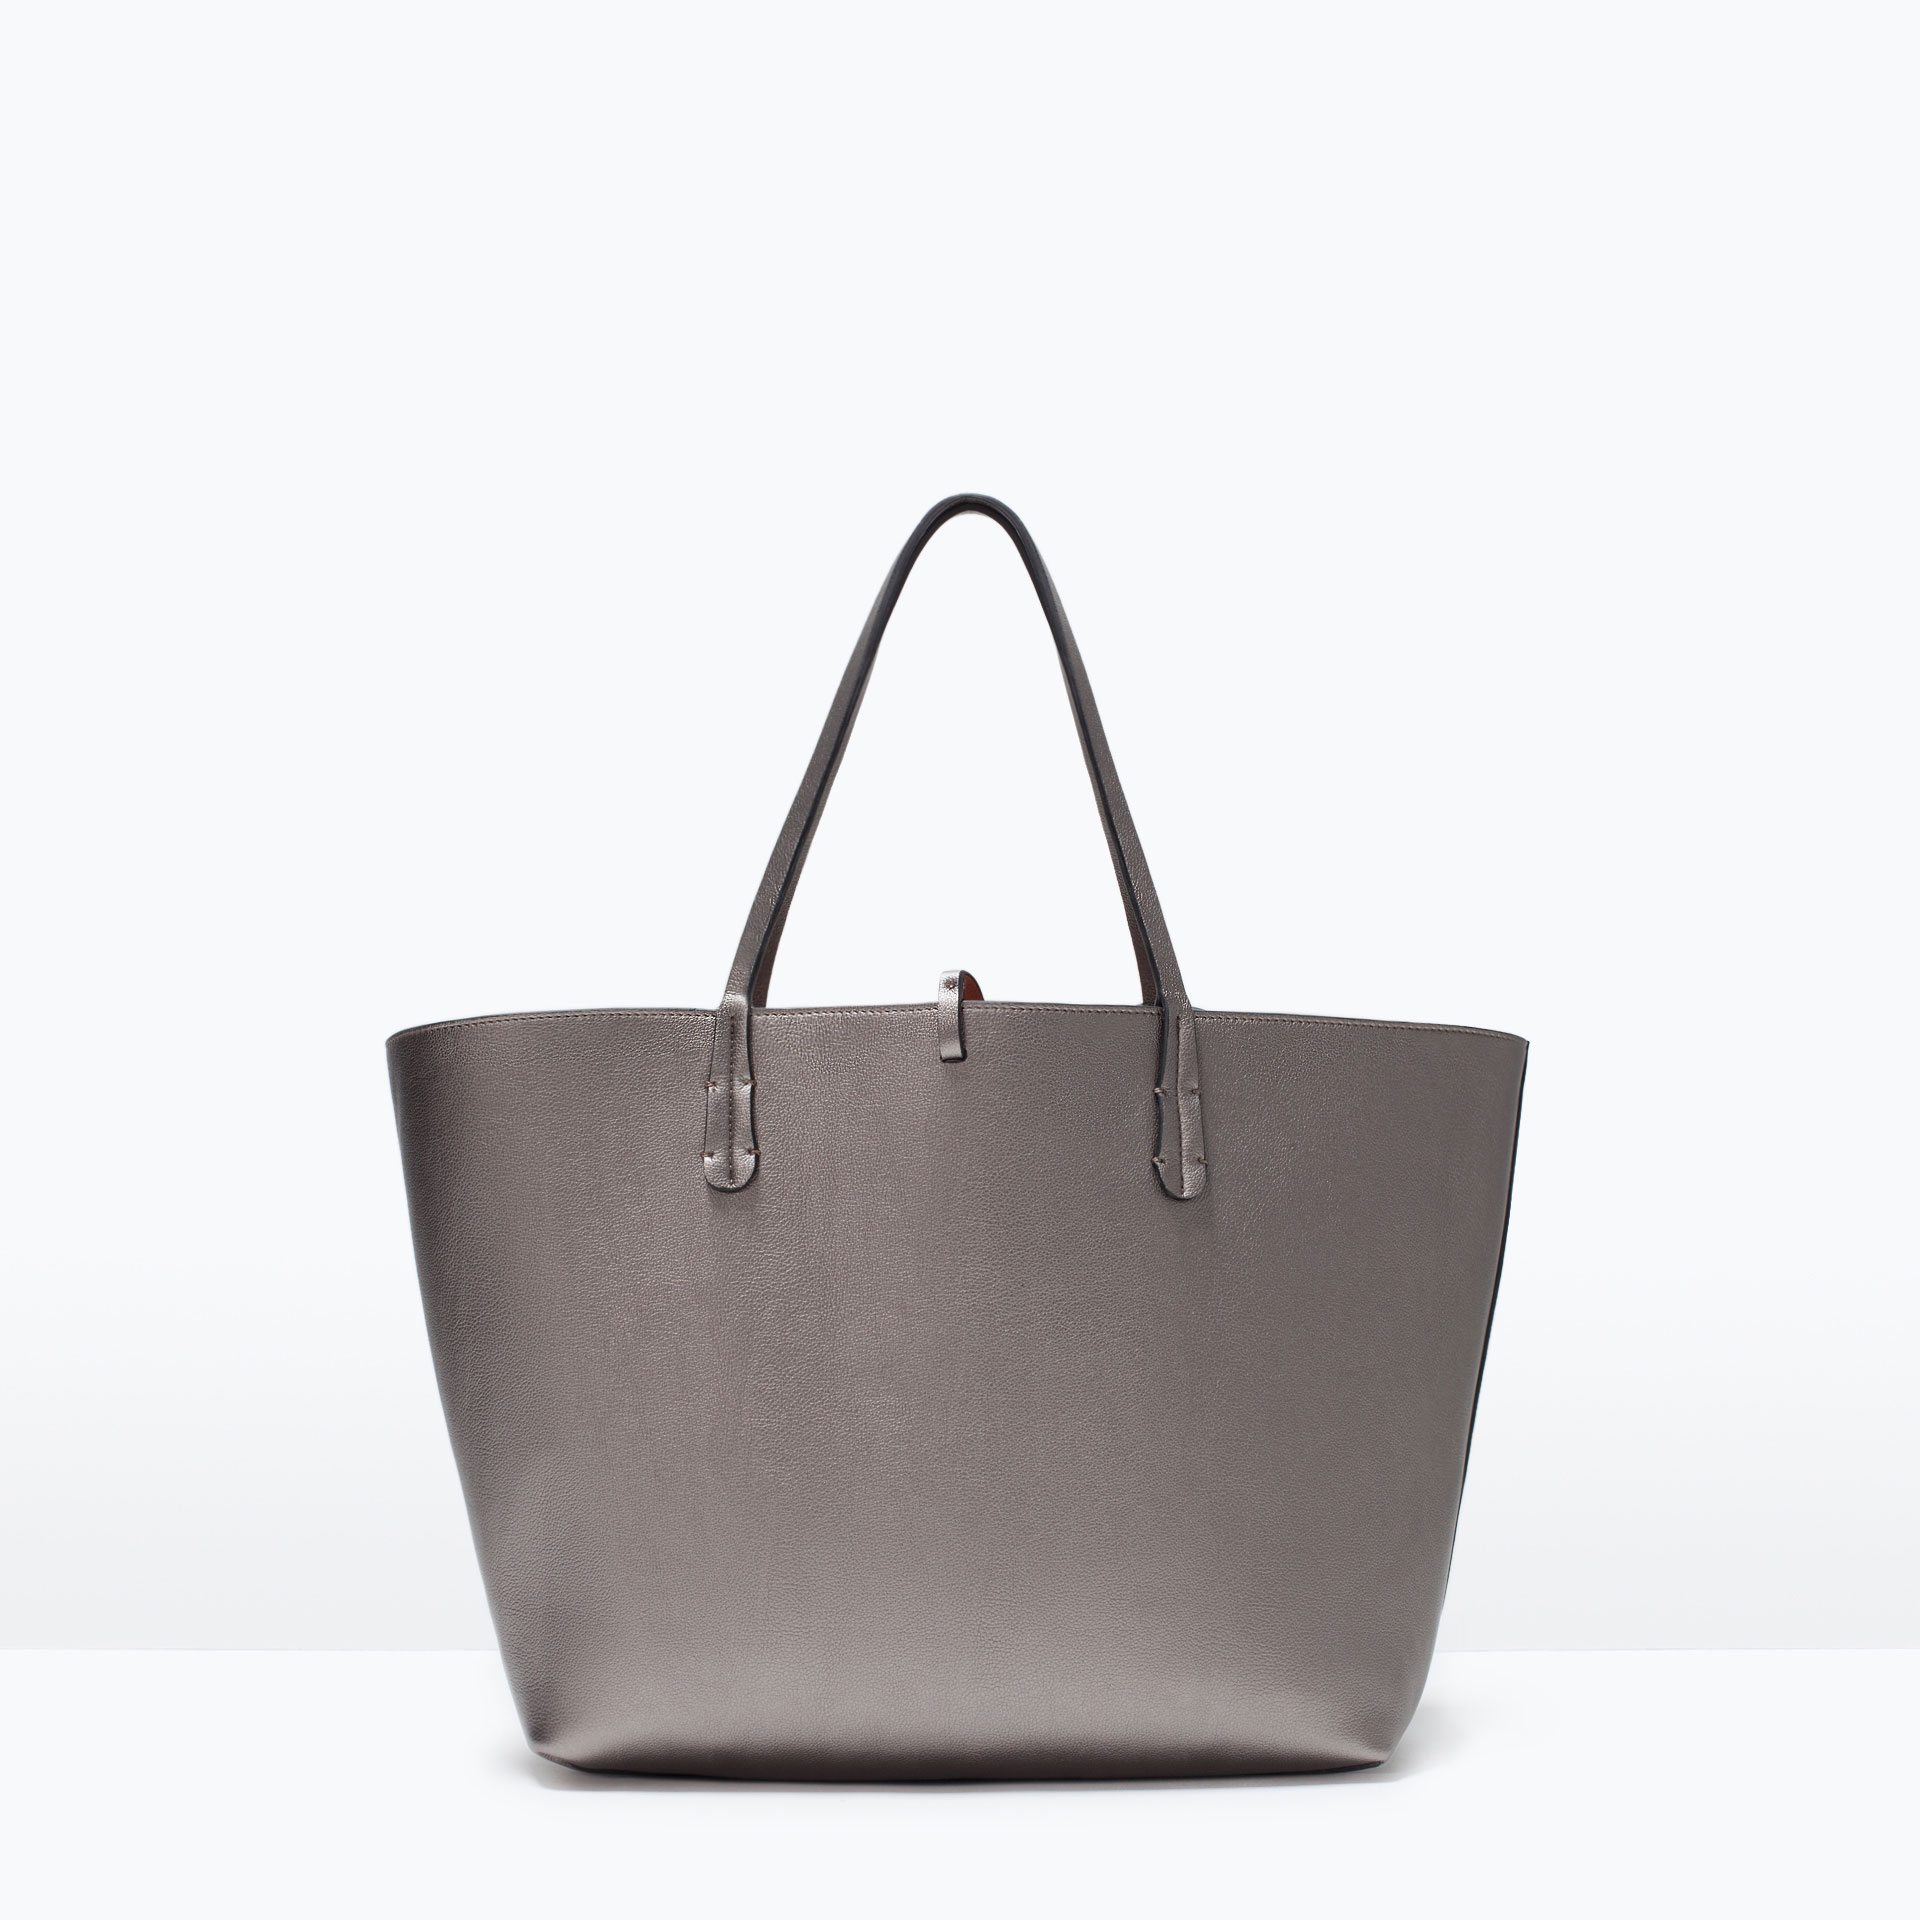 Zara Reversible Metallic Shopper Bag in Silver